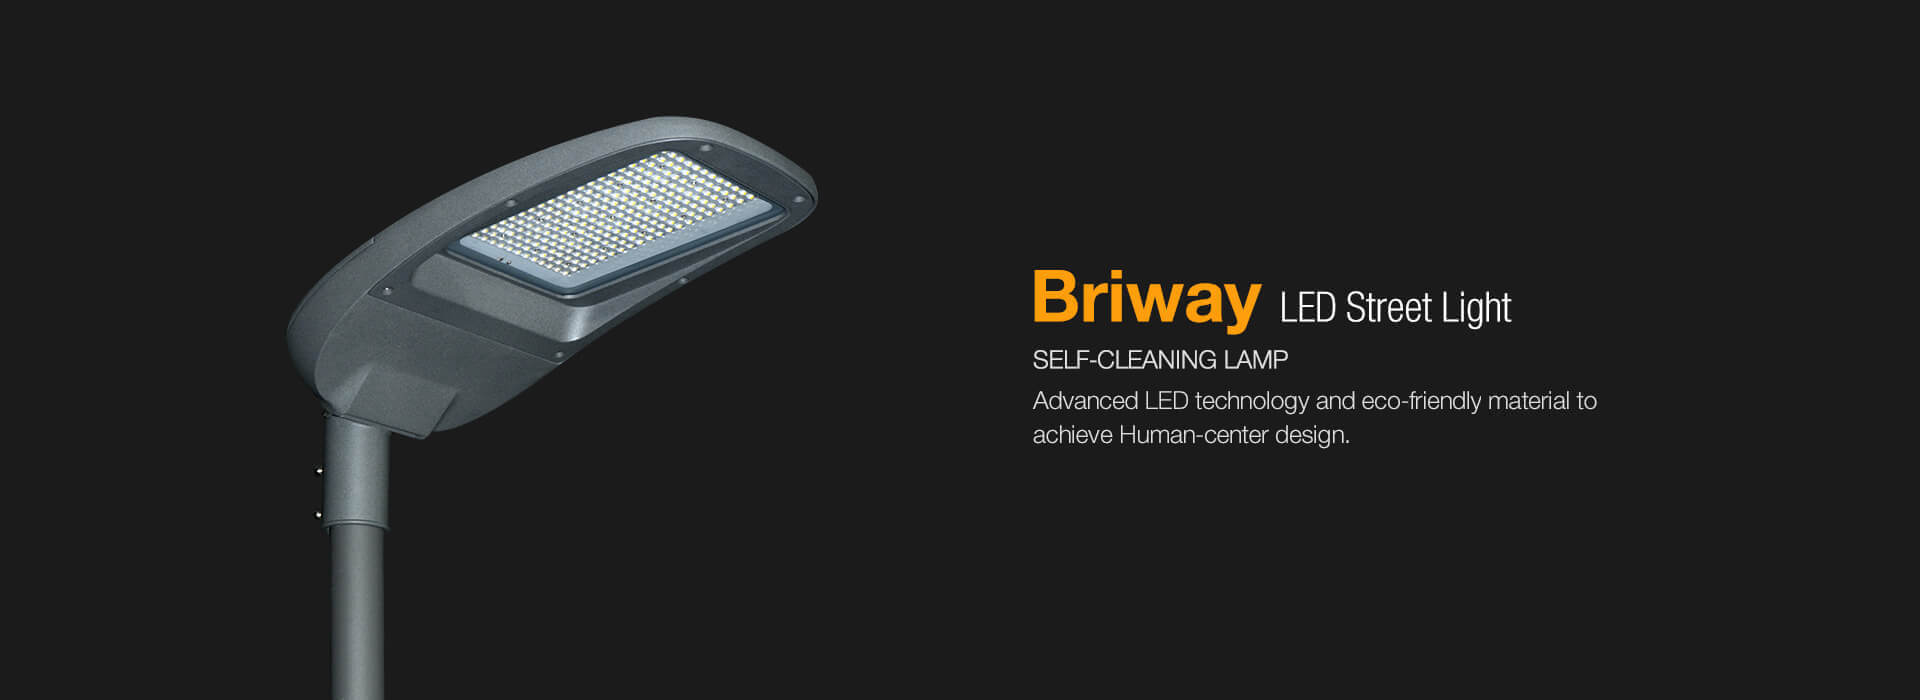 Briway LED Street Light